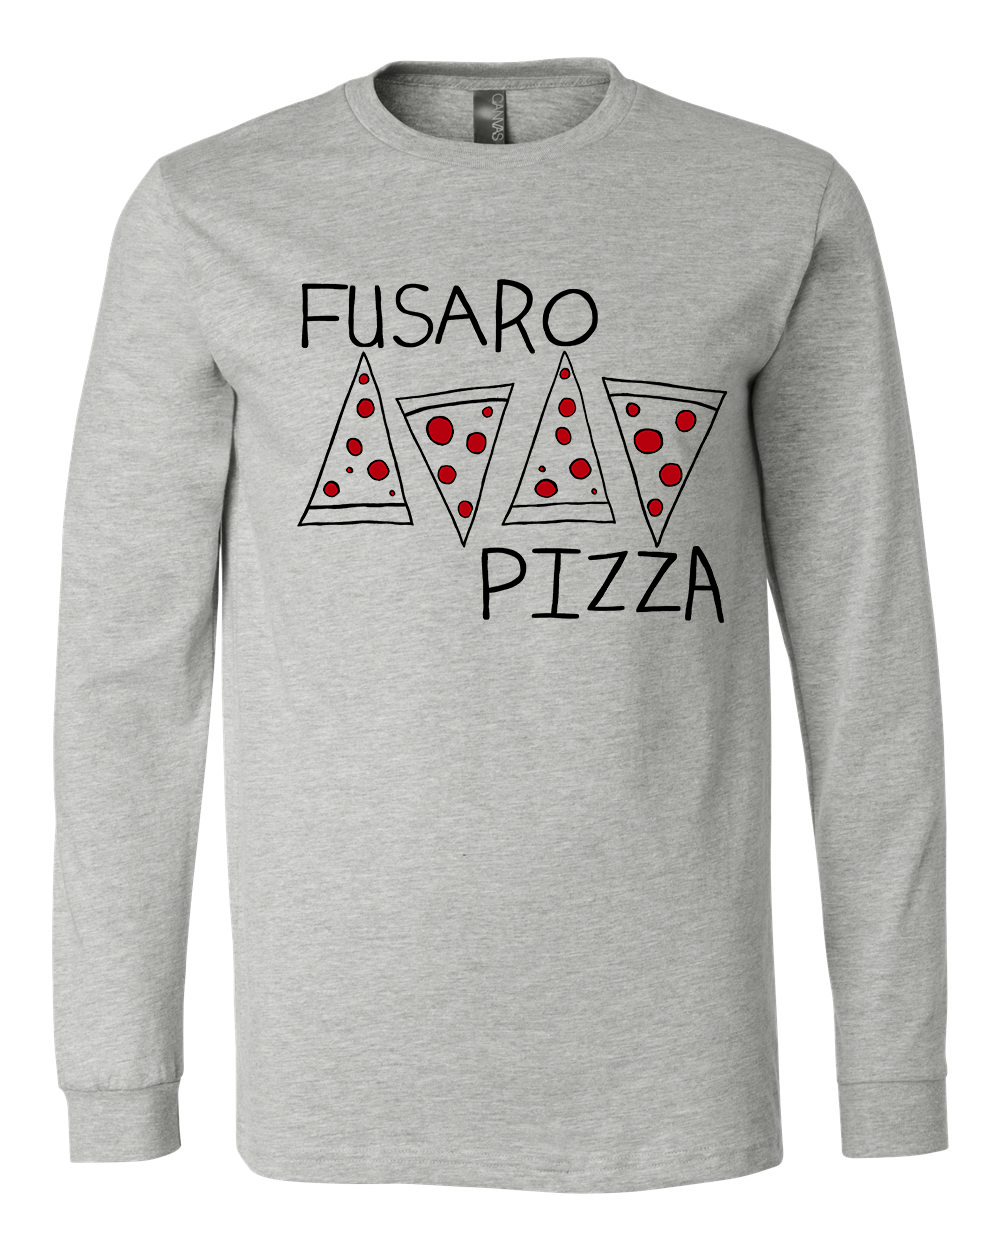 Fusaro Pizza : Slices Long Sleeve